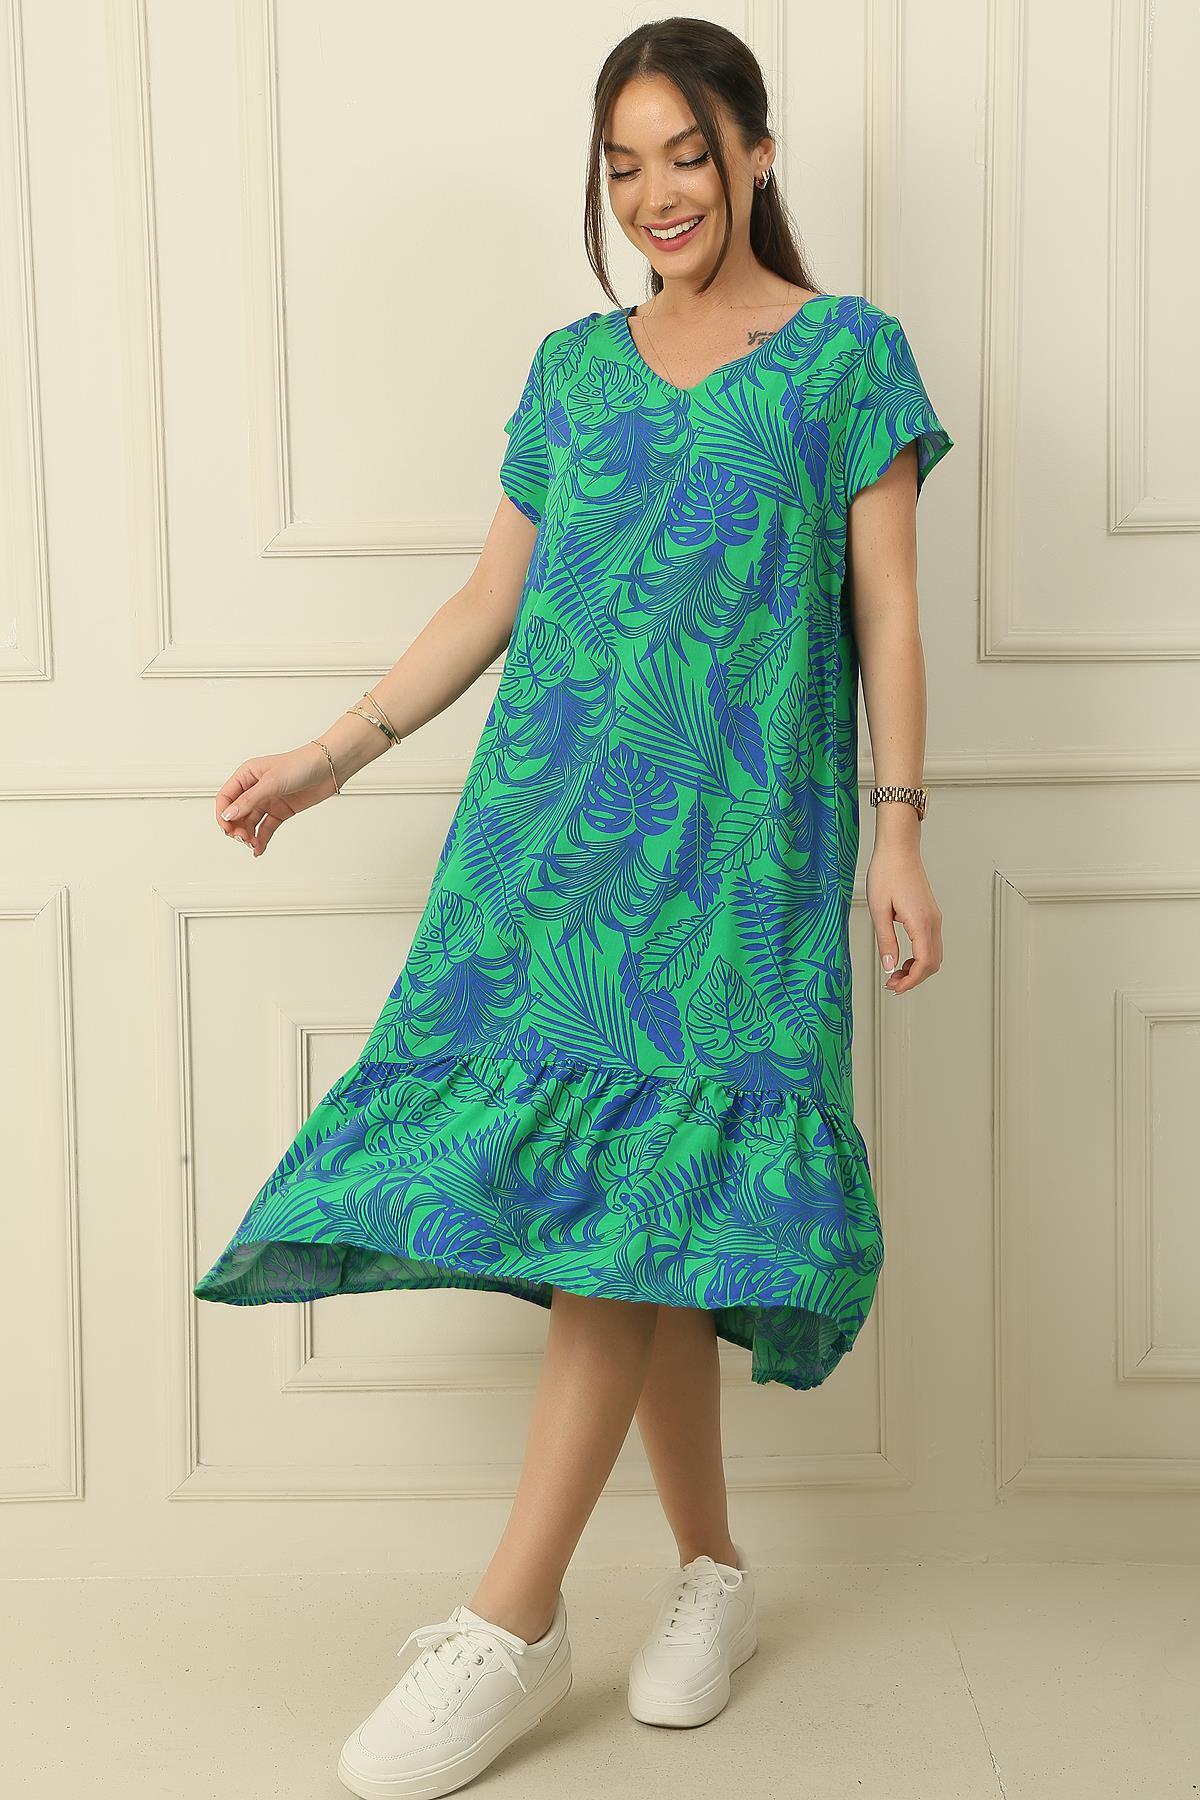 By Saygı V-neck Leaf Pattern Skirt Pleated Oversize Comfortable Fit Viscose Dress